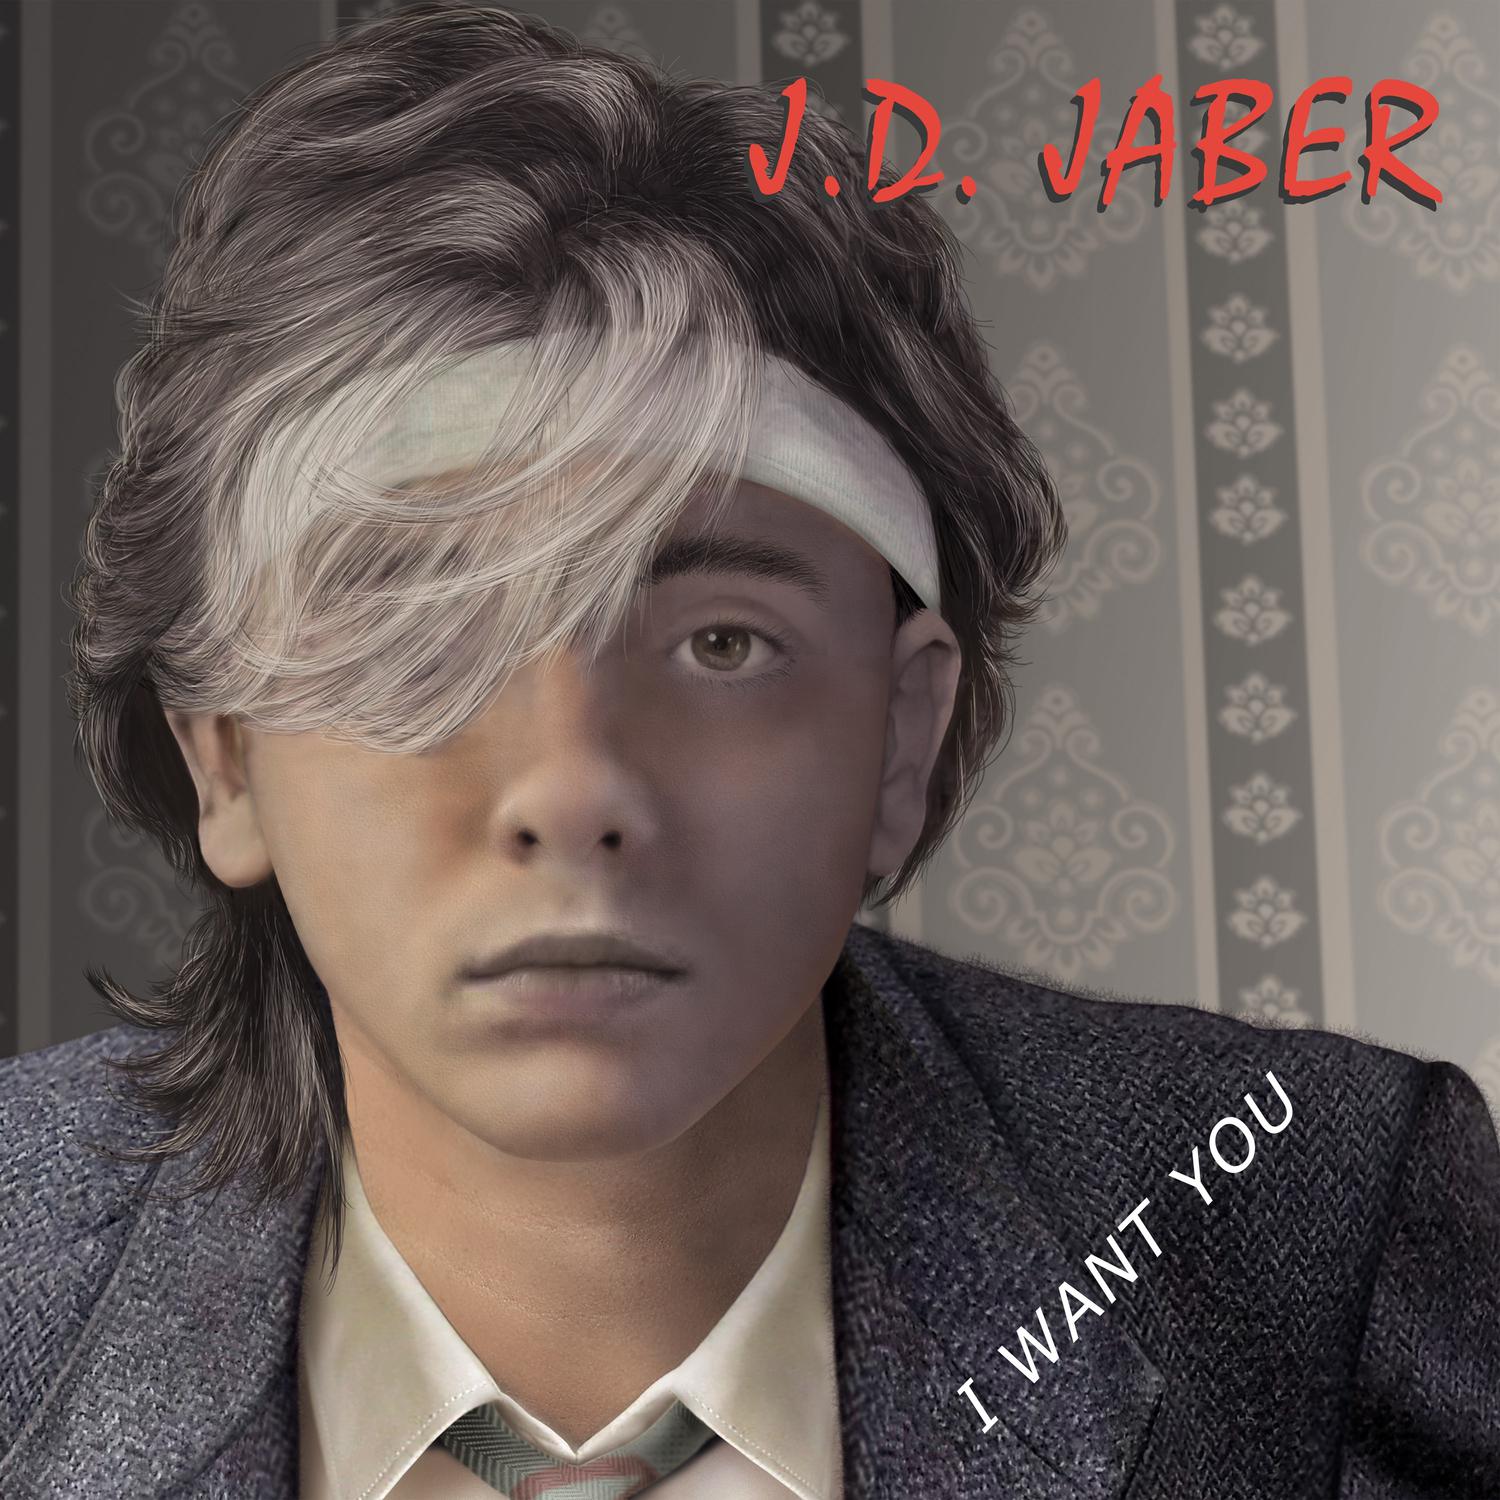 J.D. Jaber - I Want You (Extended Version)